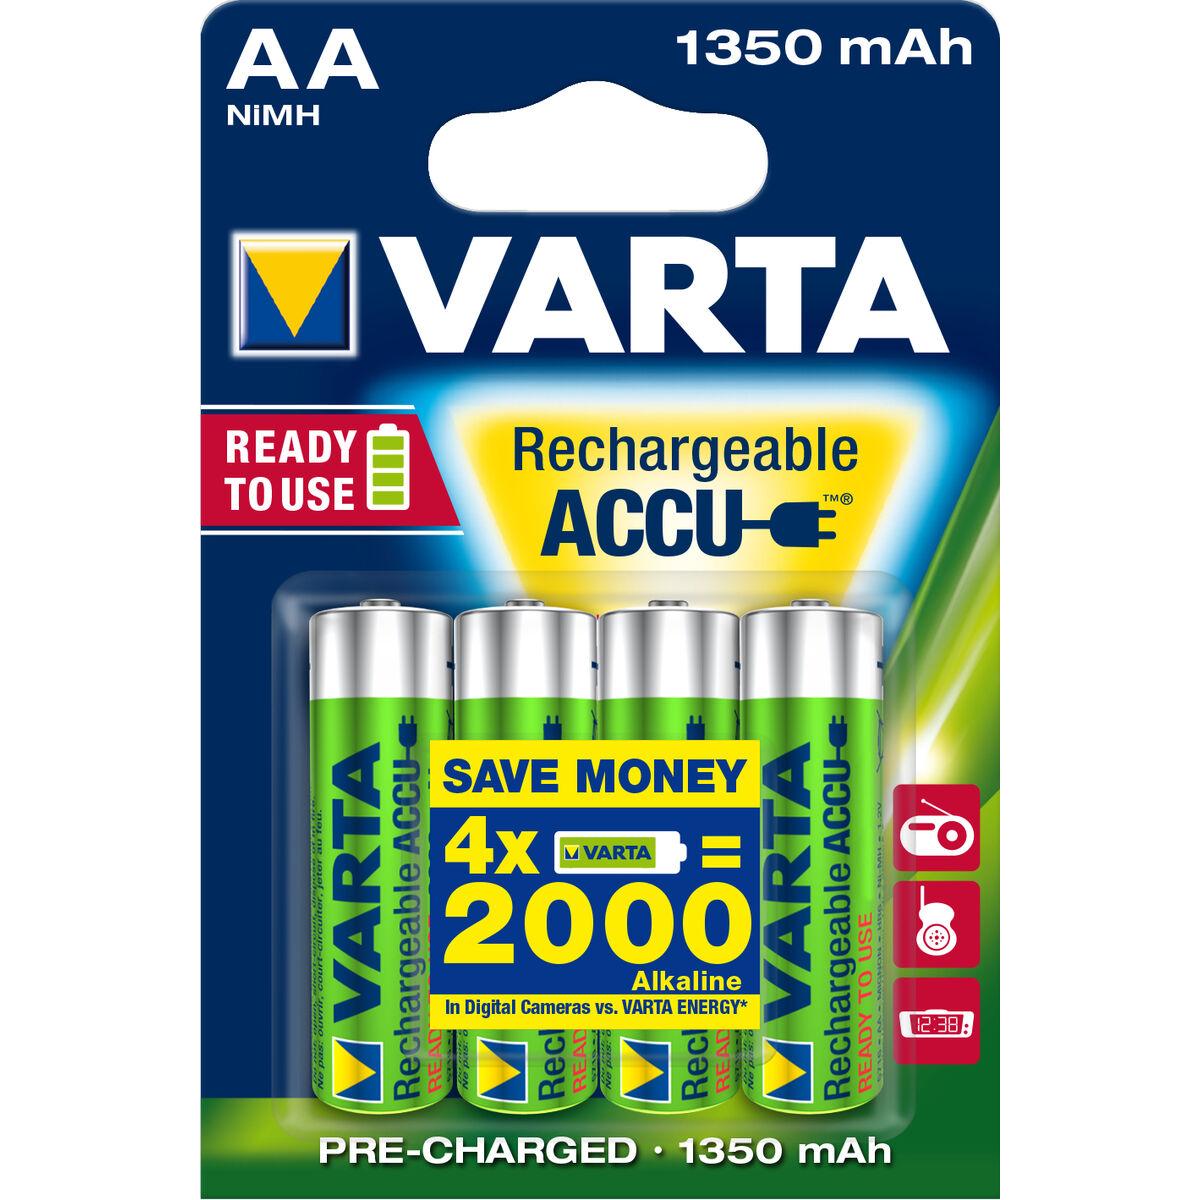 Se Varta Recharge Charge Accu Power Aa 1350mah 4 Pack - Batteri hos Boligcenter.dk